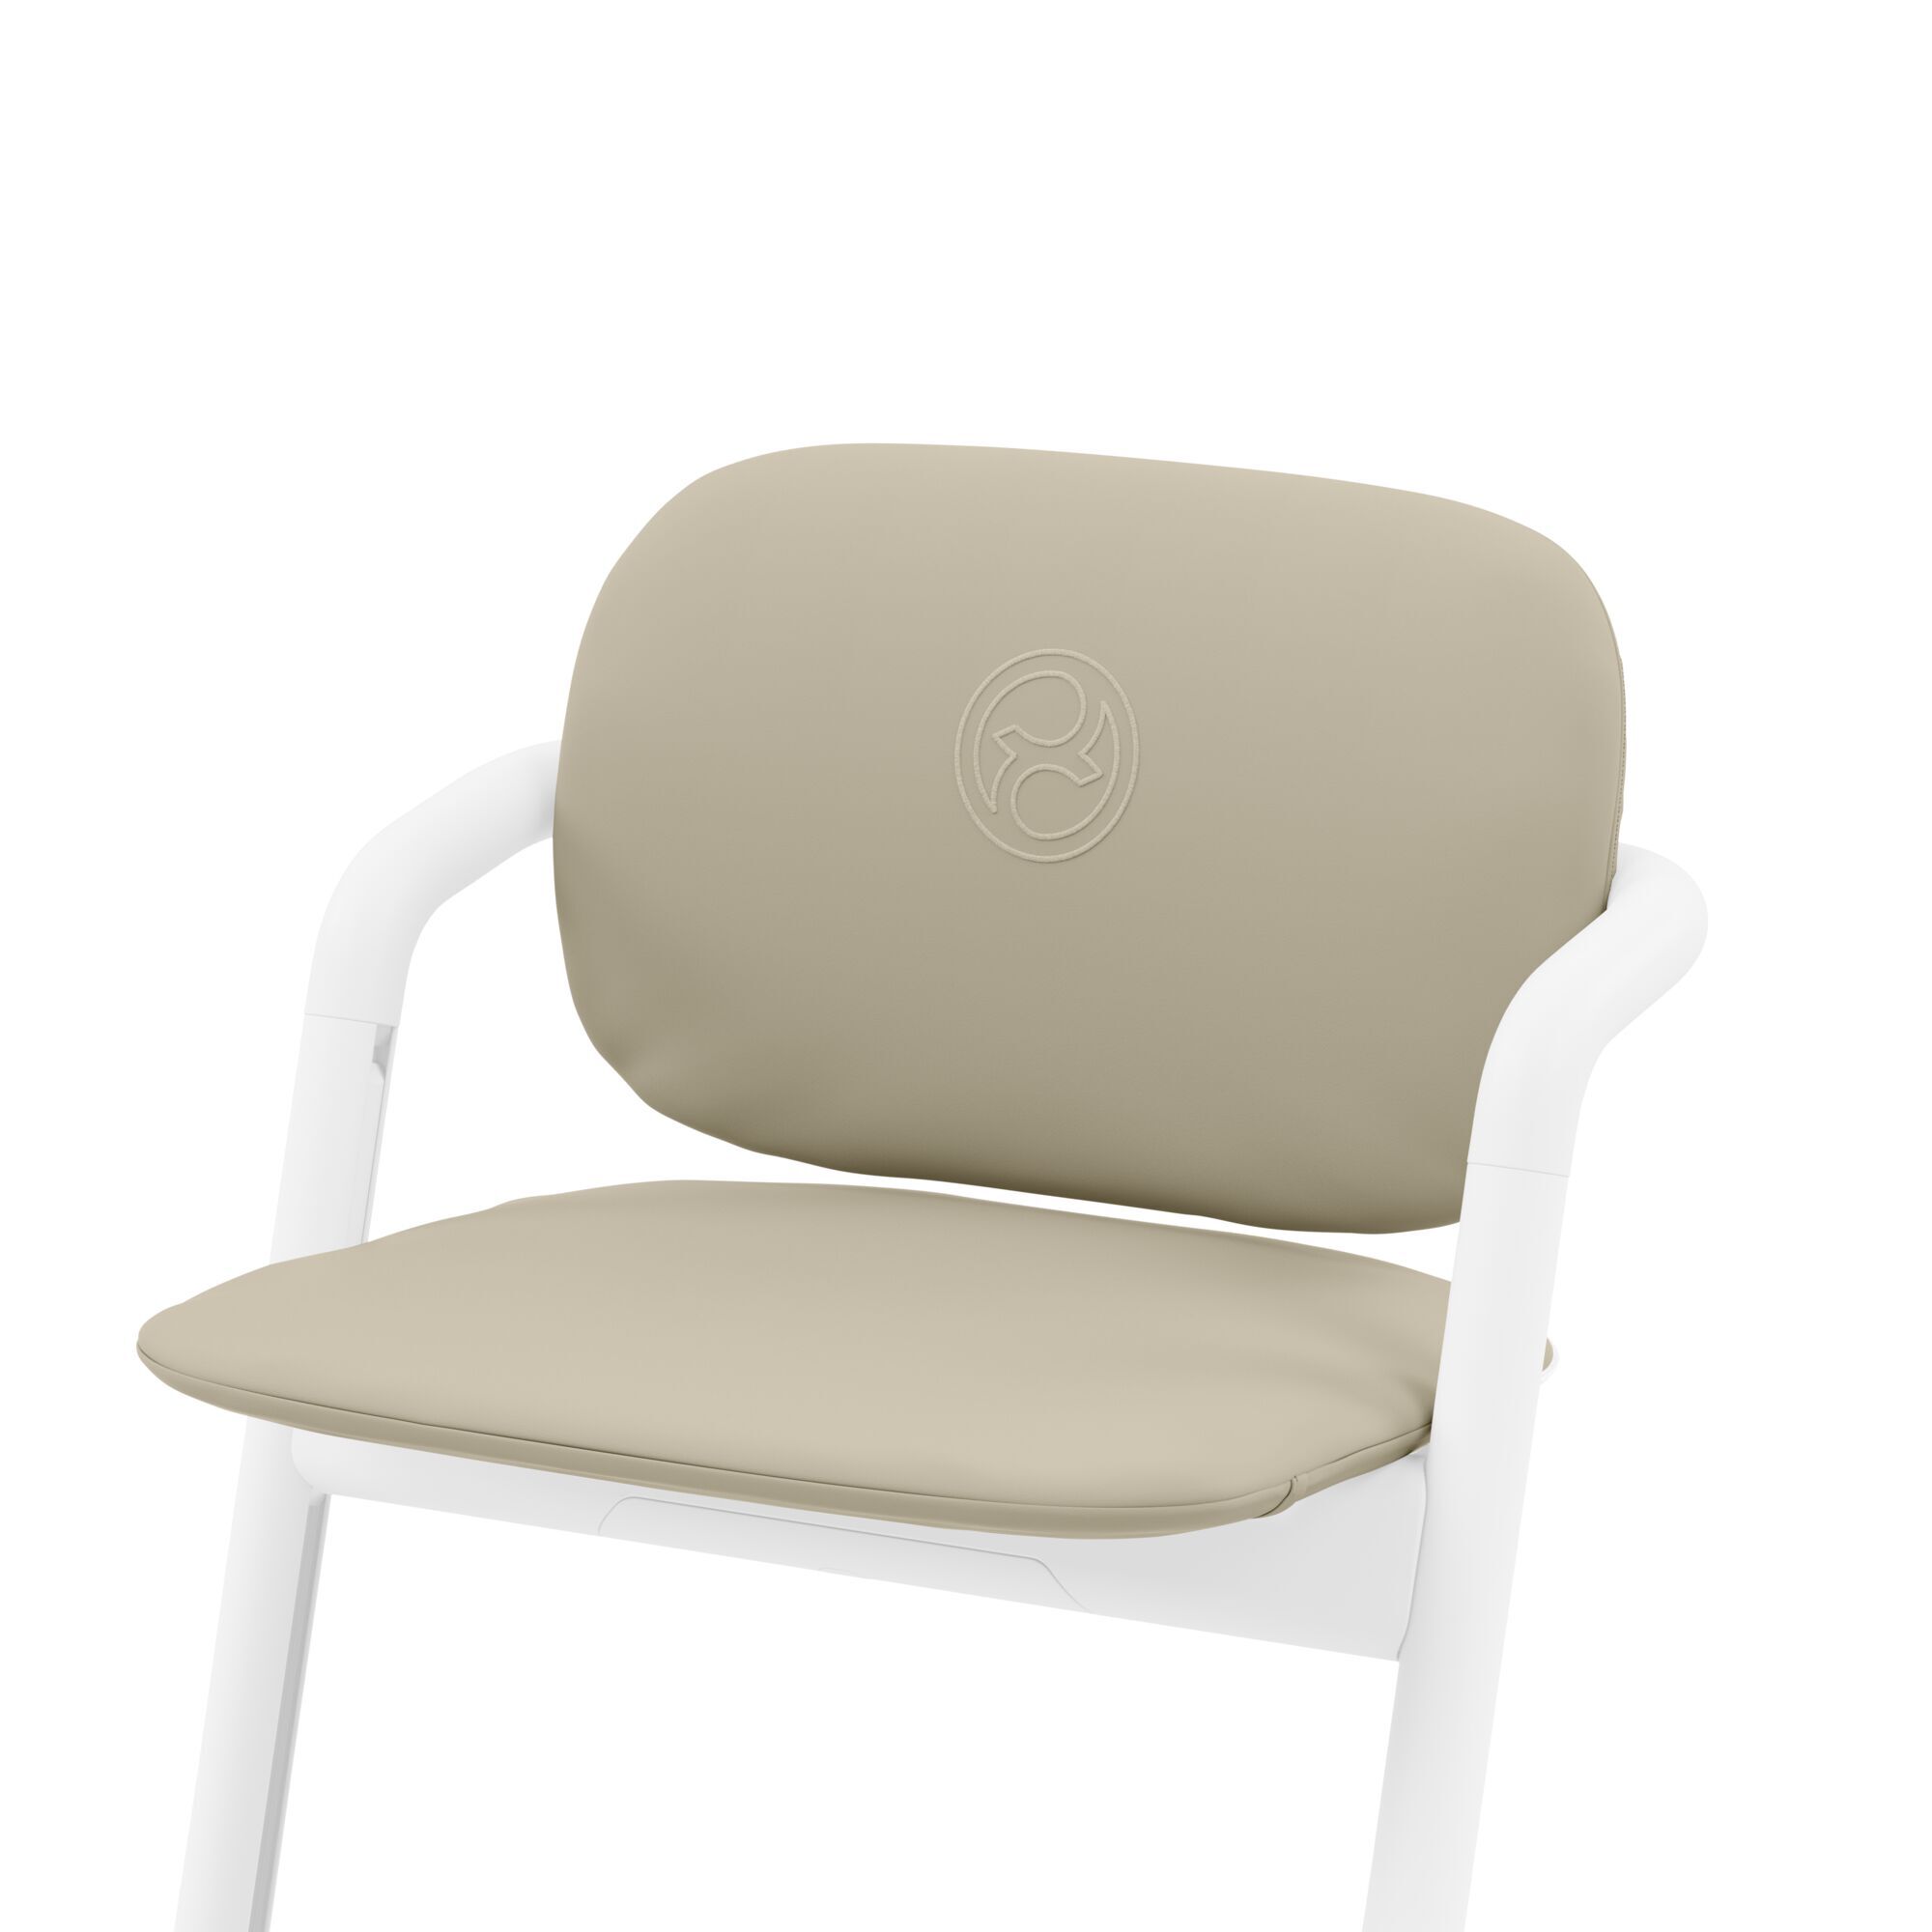 Вкладыш мягкий для стульчика Lemo Sand White бежевый (521003299) - фото 2